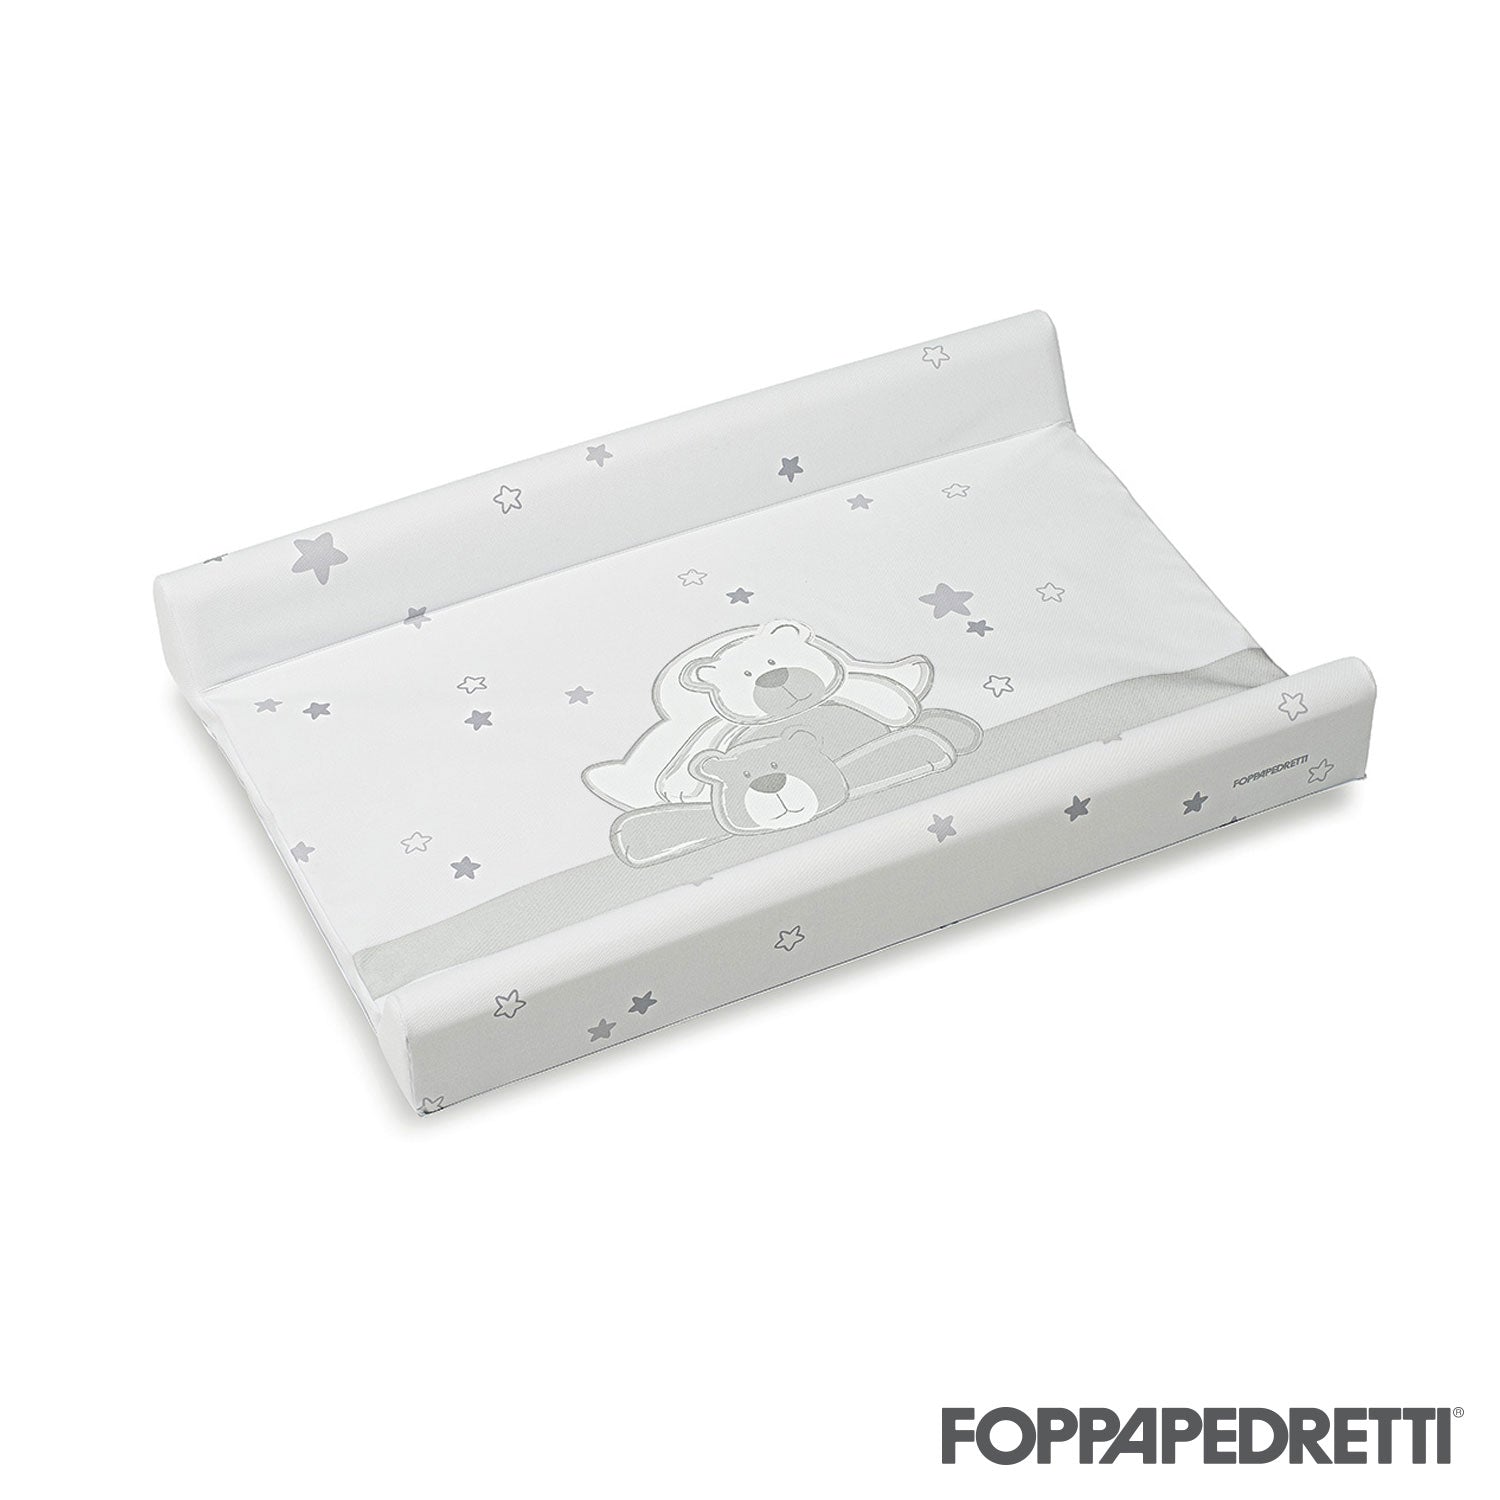 Foppapedretti - Materassino per Fasciatoio - Ricambio Originale – Iperbimbo